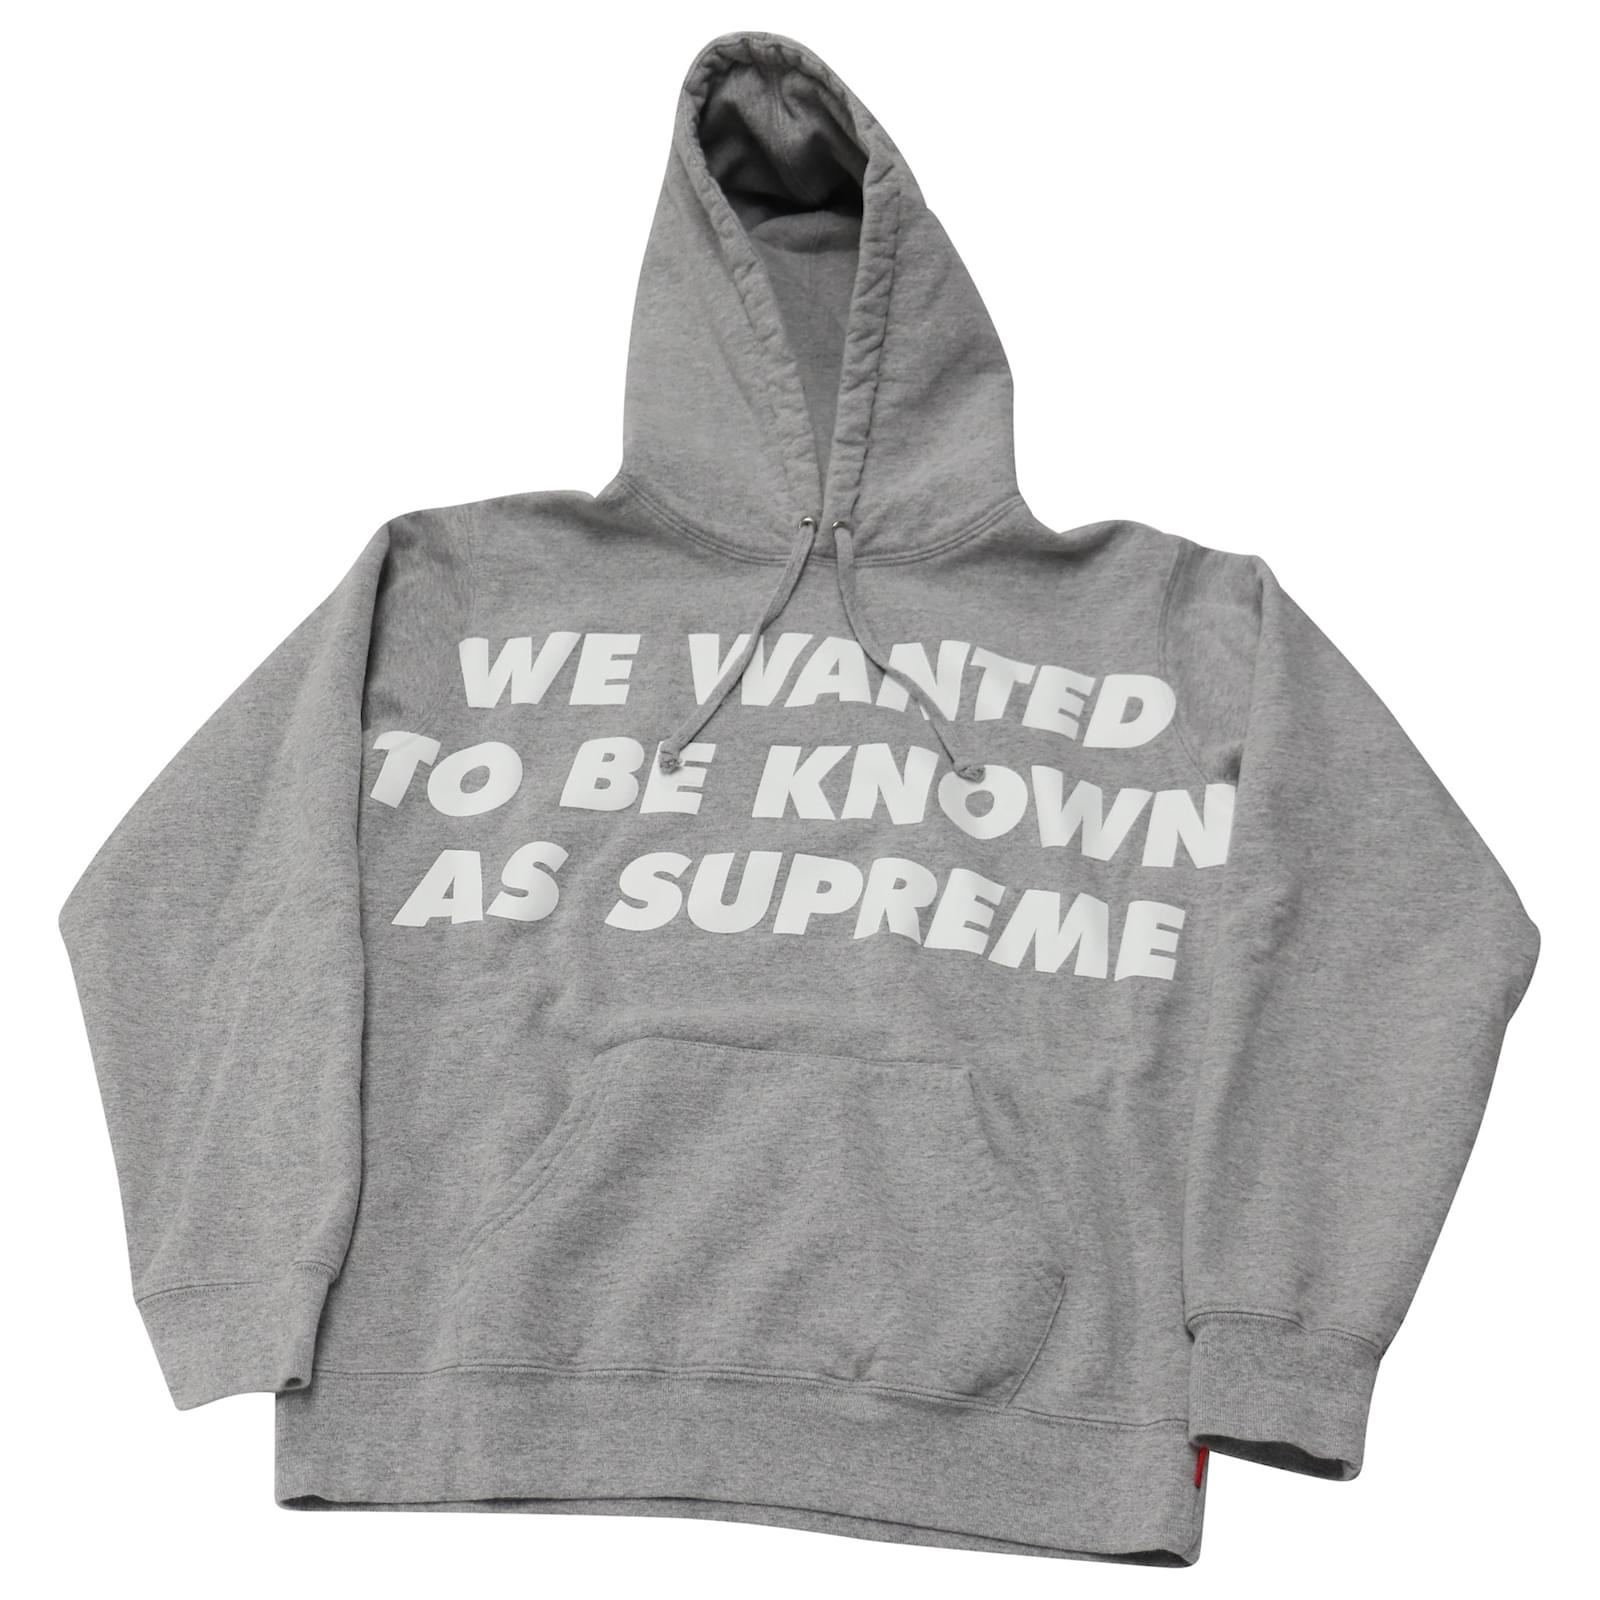 Supreme, Sweaters